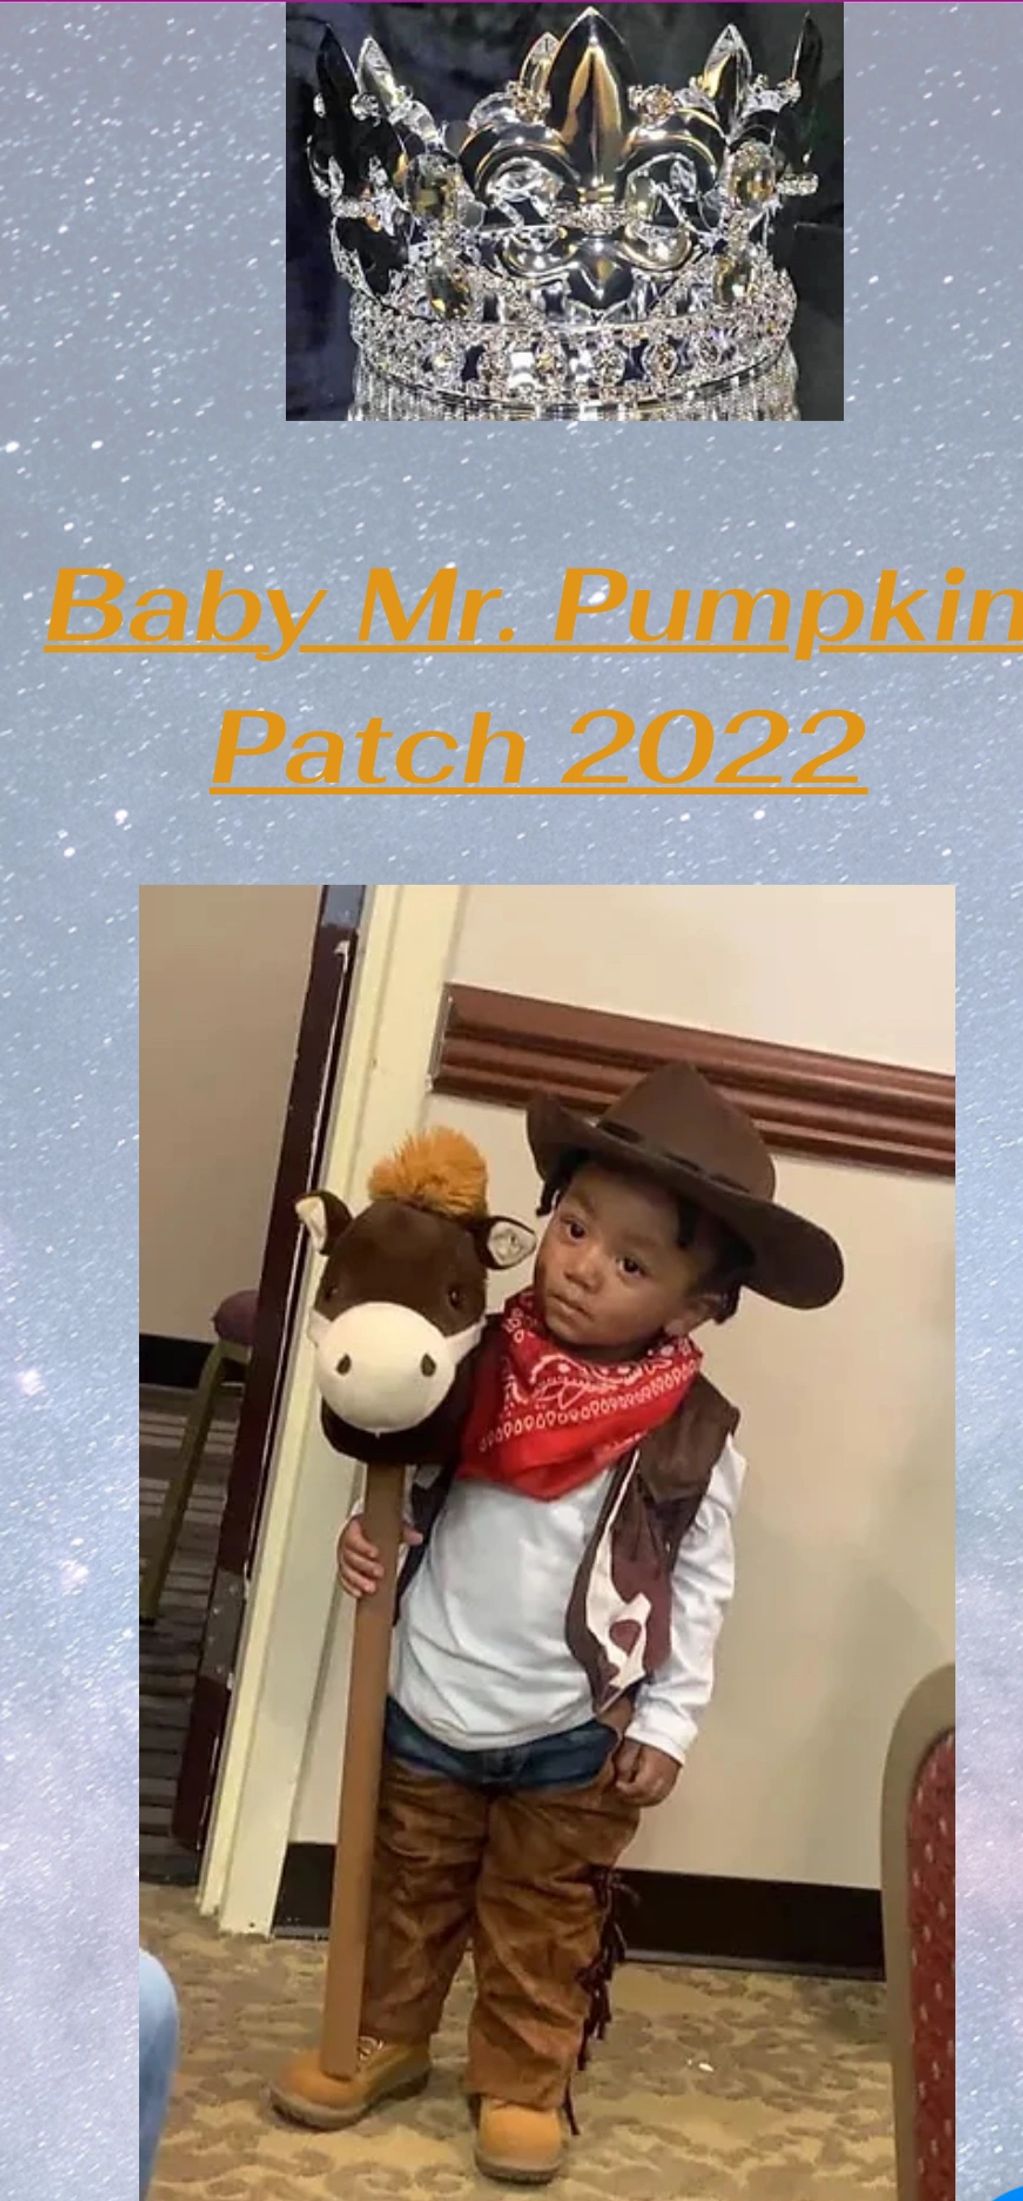 Baby Mr pumpkin patch kid 2022 Dante aka cowboy